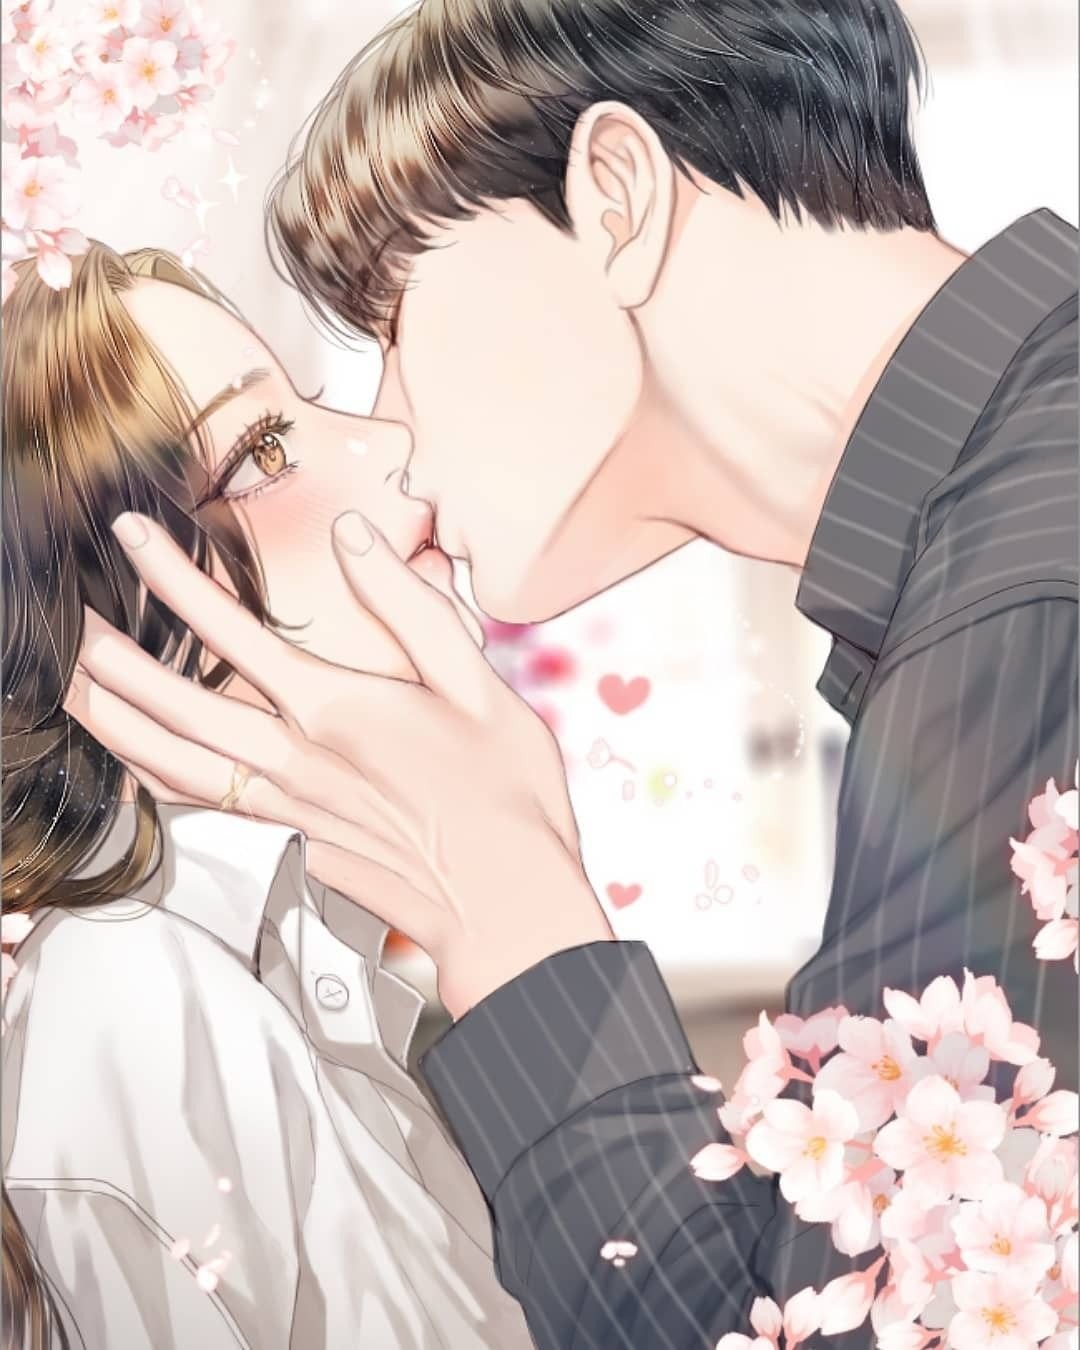 Читать манхву влюбленный. Маньхуа Немилая поцелуй. Корейская манхва парочки. Романтика манхва и манхуа.